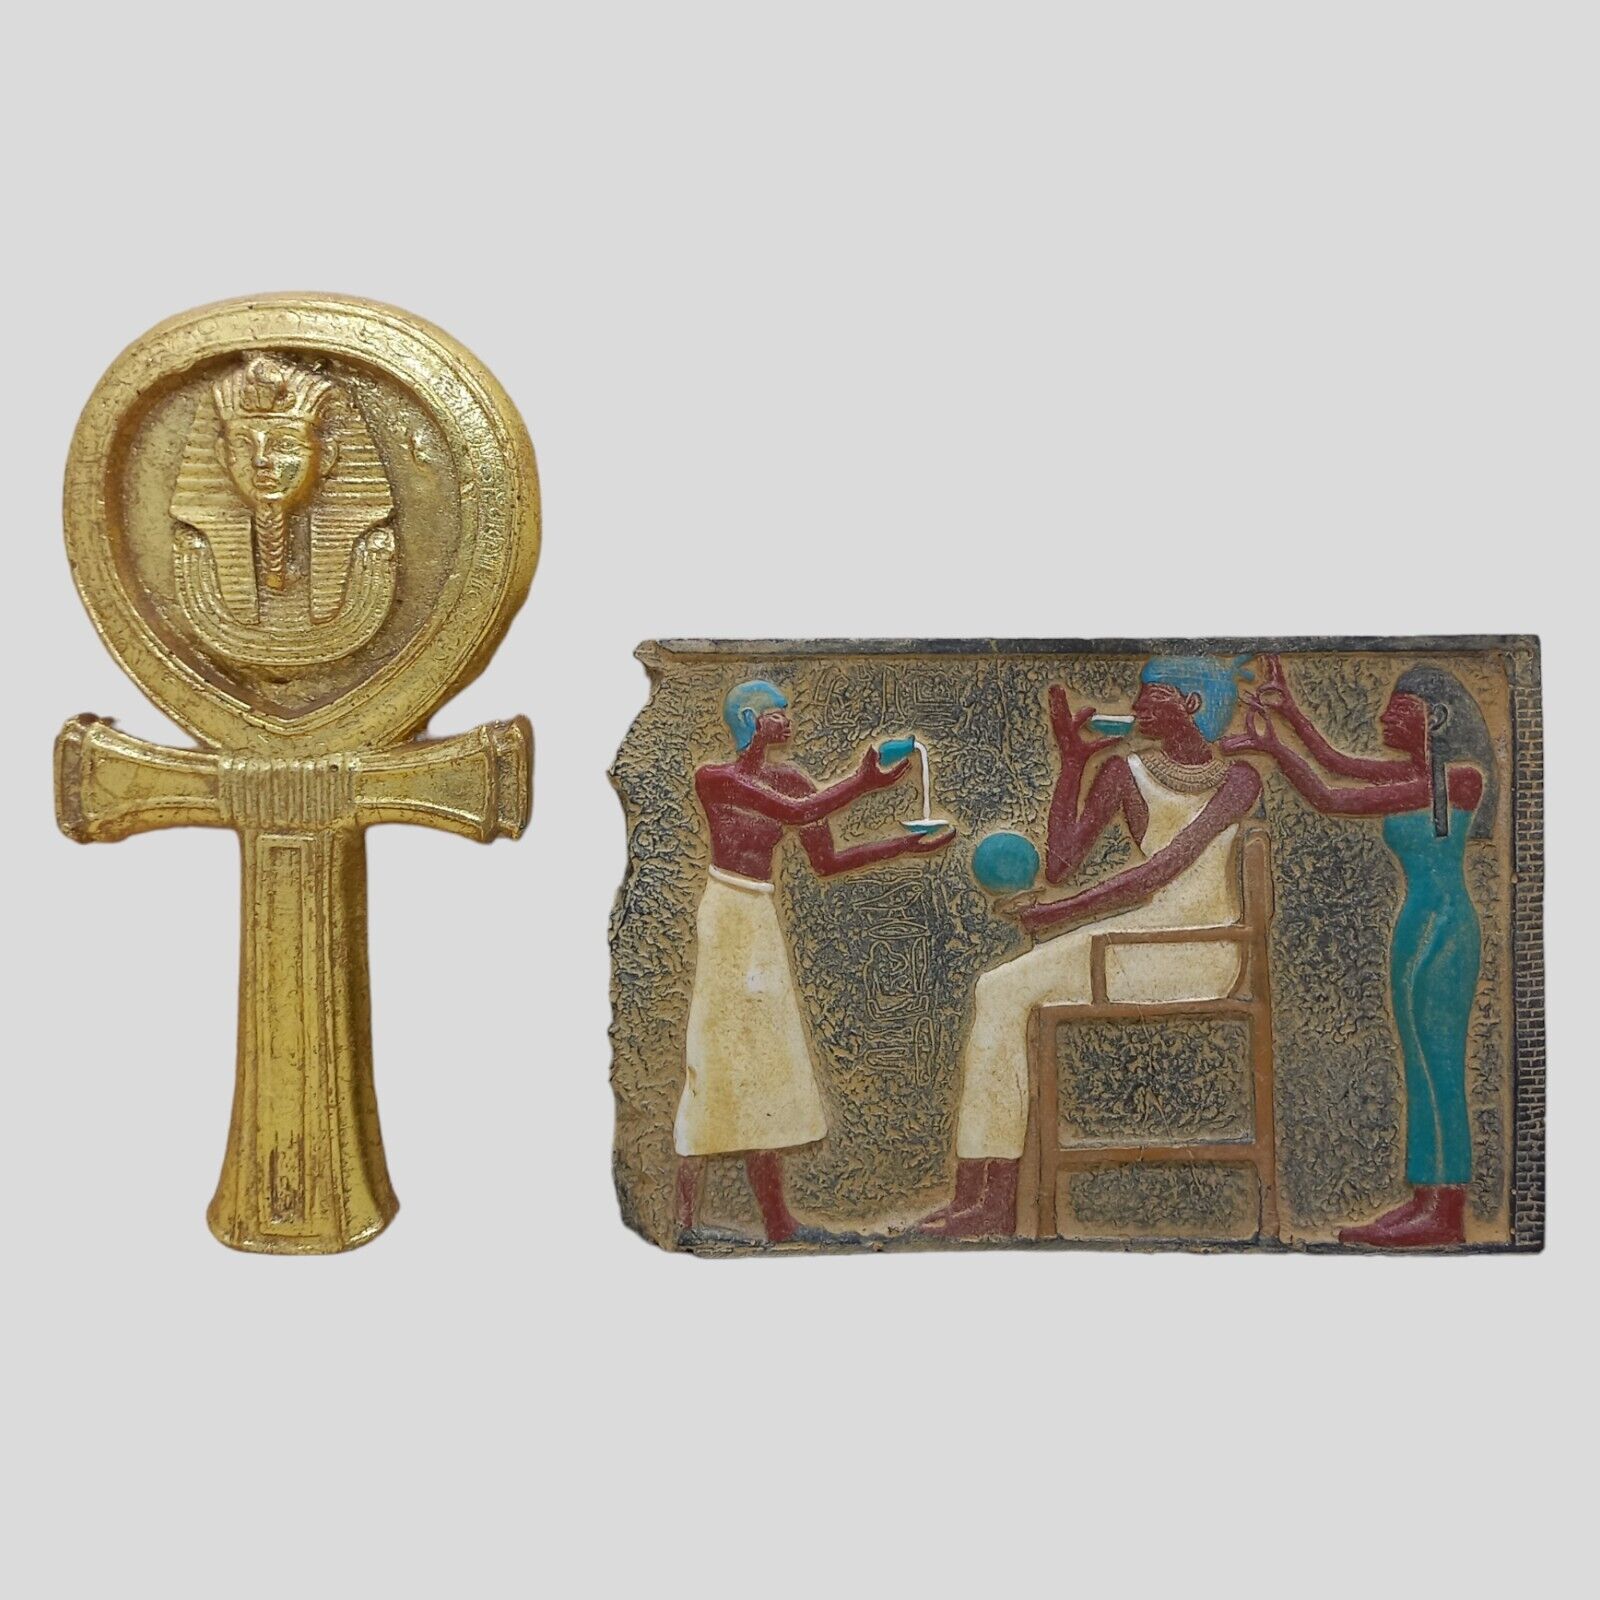 RARE ANCIENT EGYPTIAN PHARAONIC ANTIQUE KING TUTANKHAMUN AND KEY OF LIFE STELLA